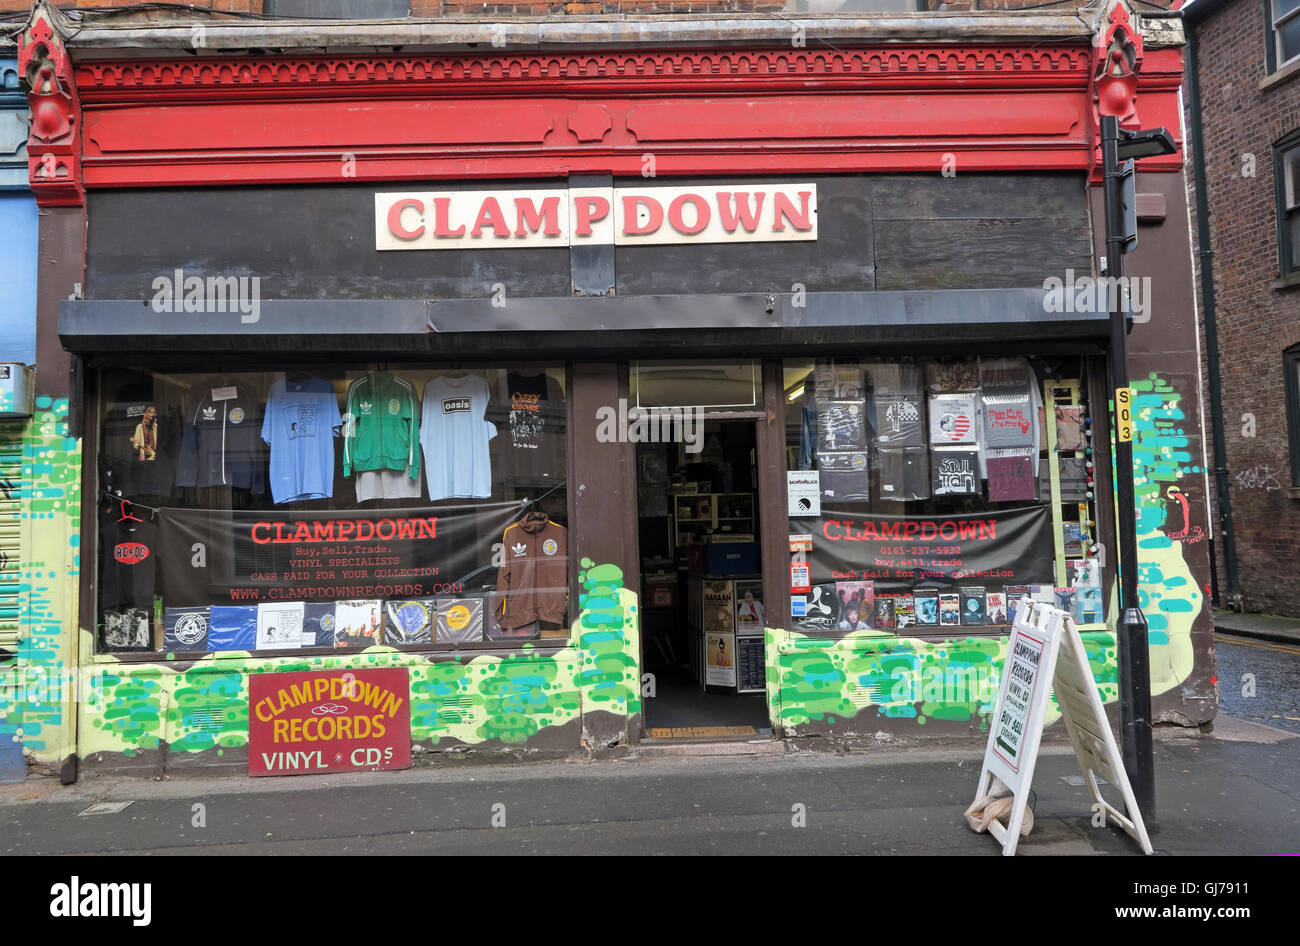 Clampdown Records, quart nord Art, NQ, Manchester, North West England, UK, M1 1JR Banque D'Images